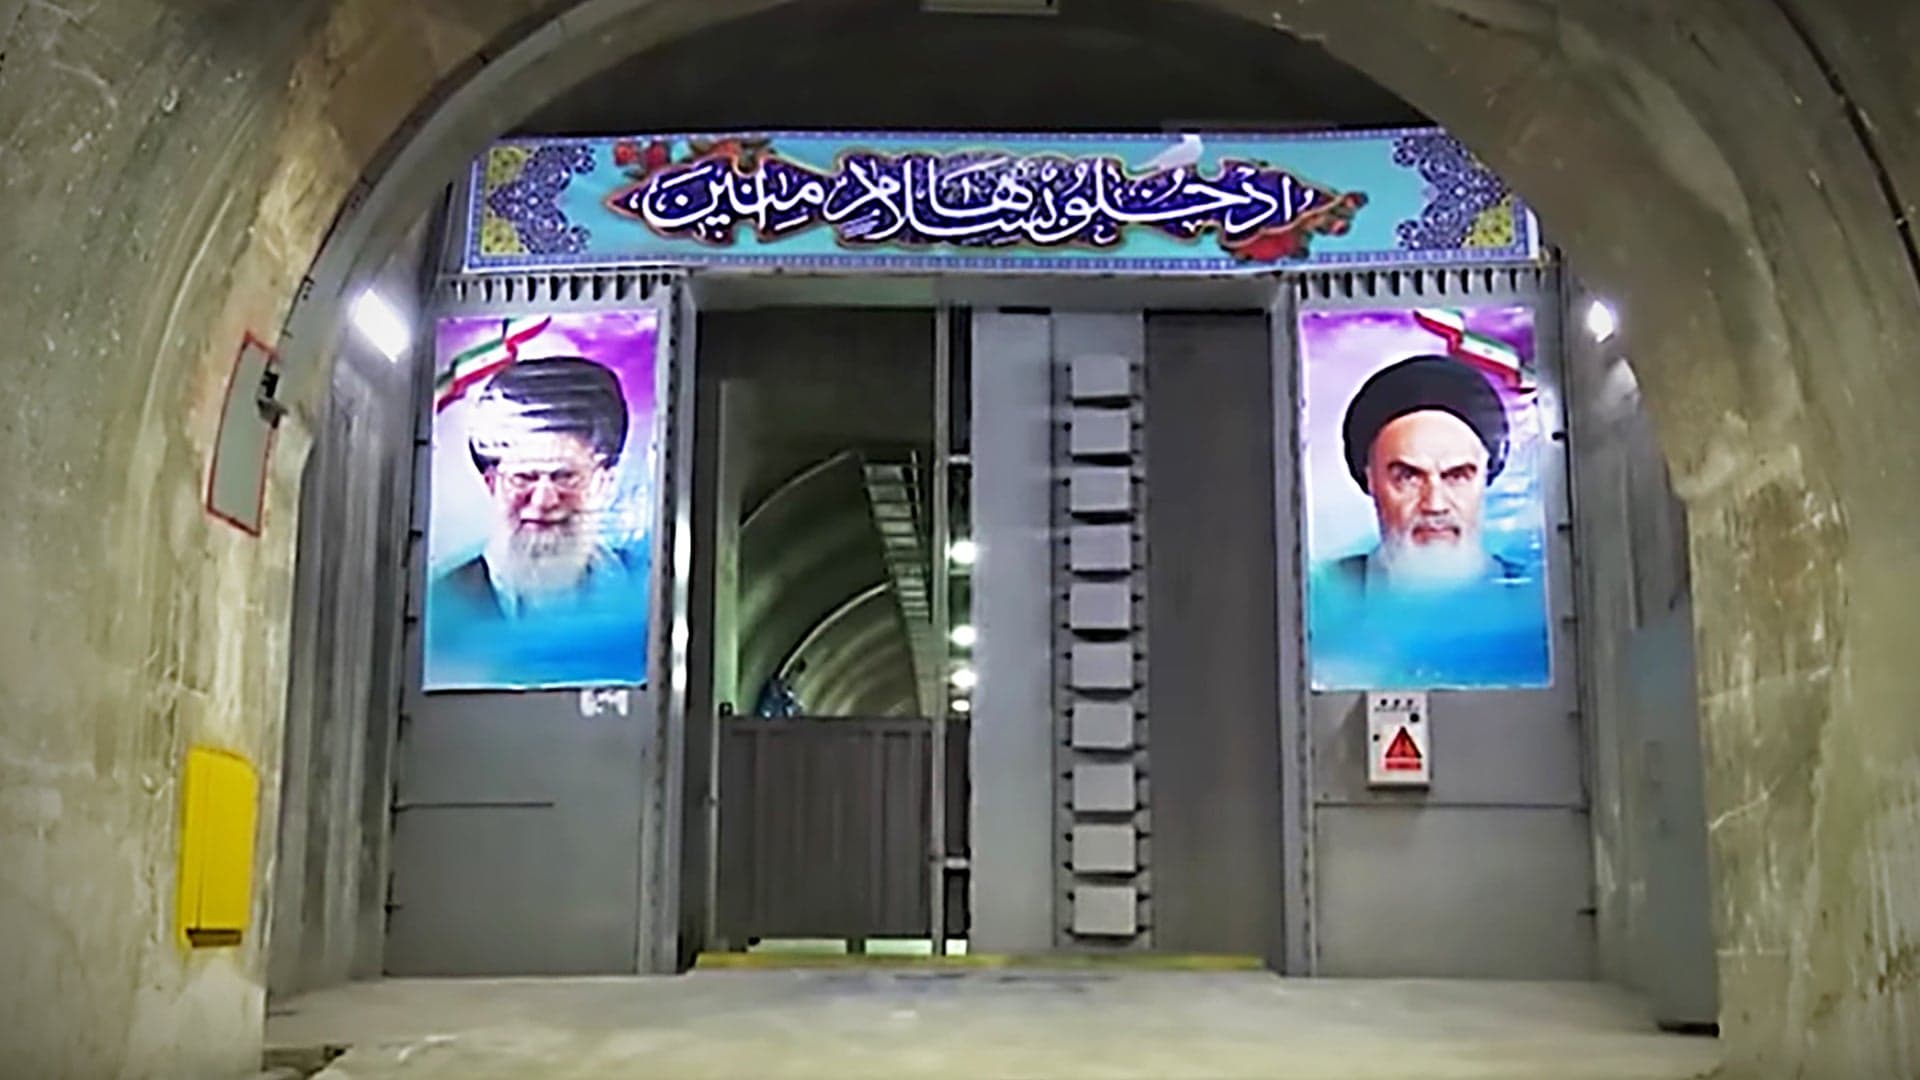 Latest Video Of Iran’s Bond Villain-Like Ballistic Missile Lairs Shows Key New Detail